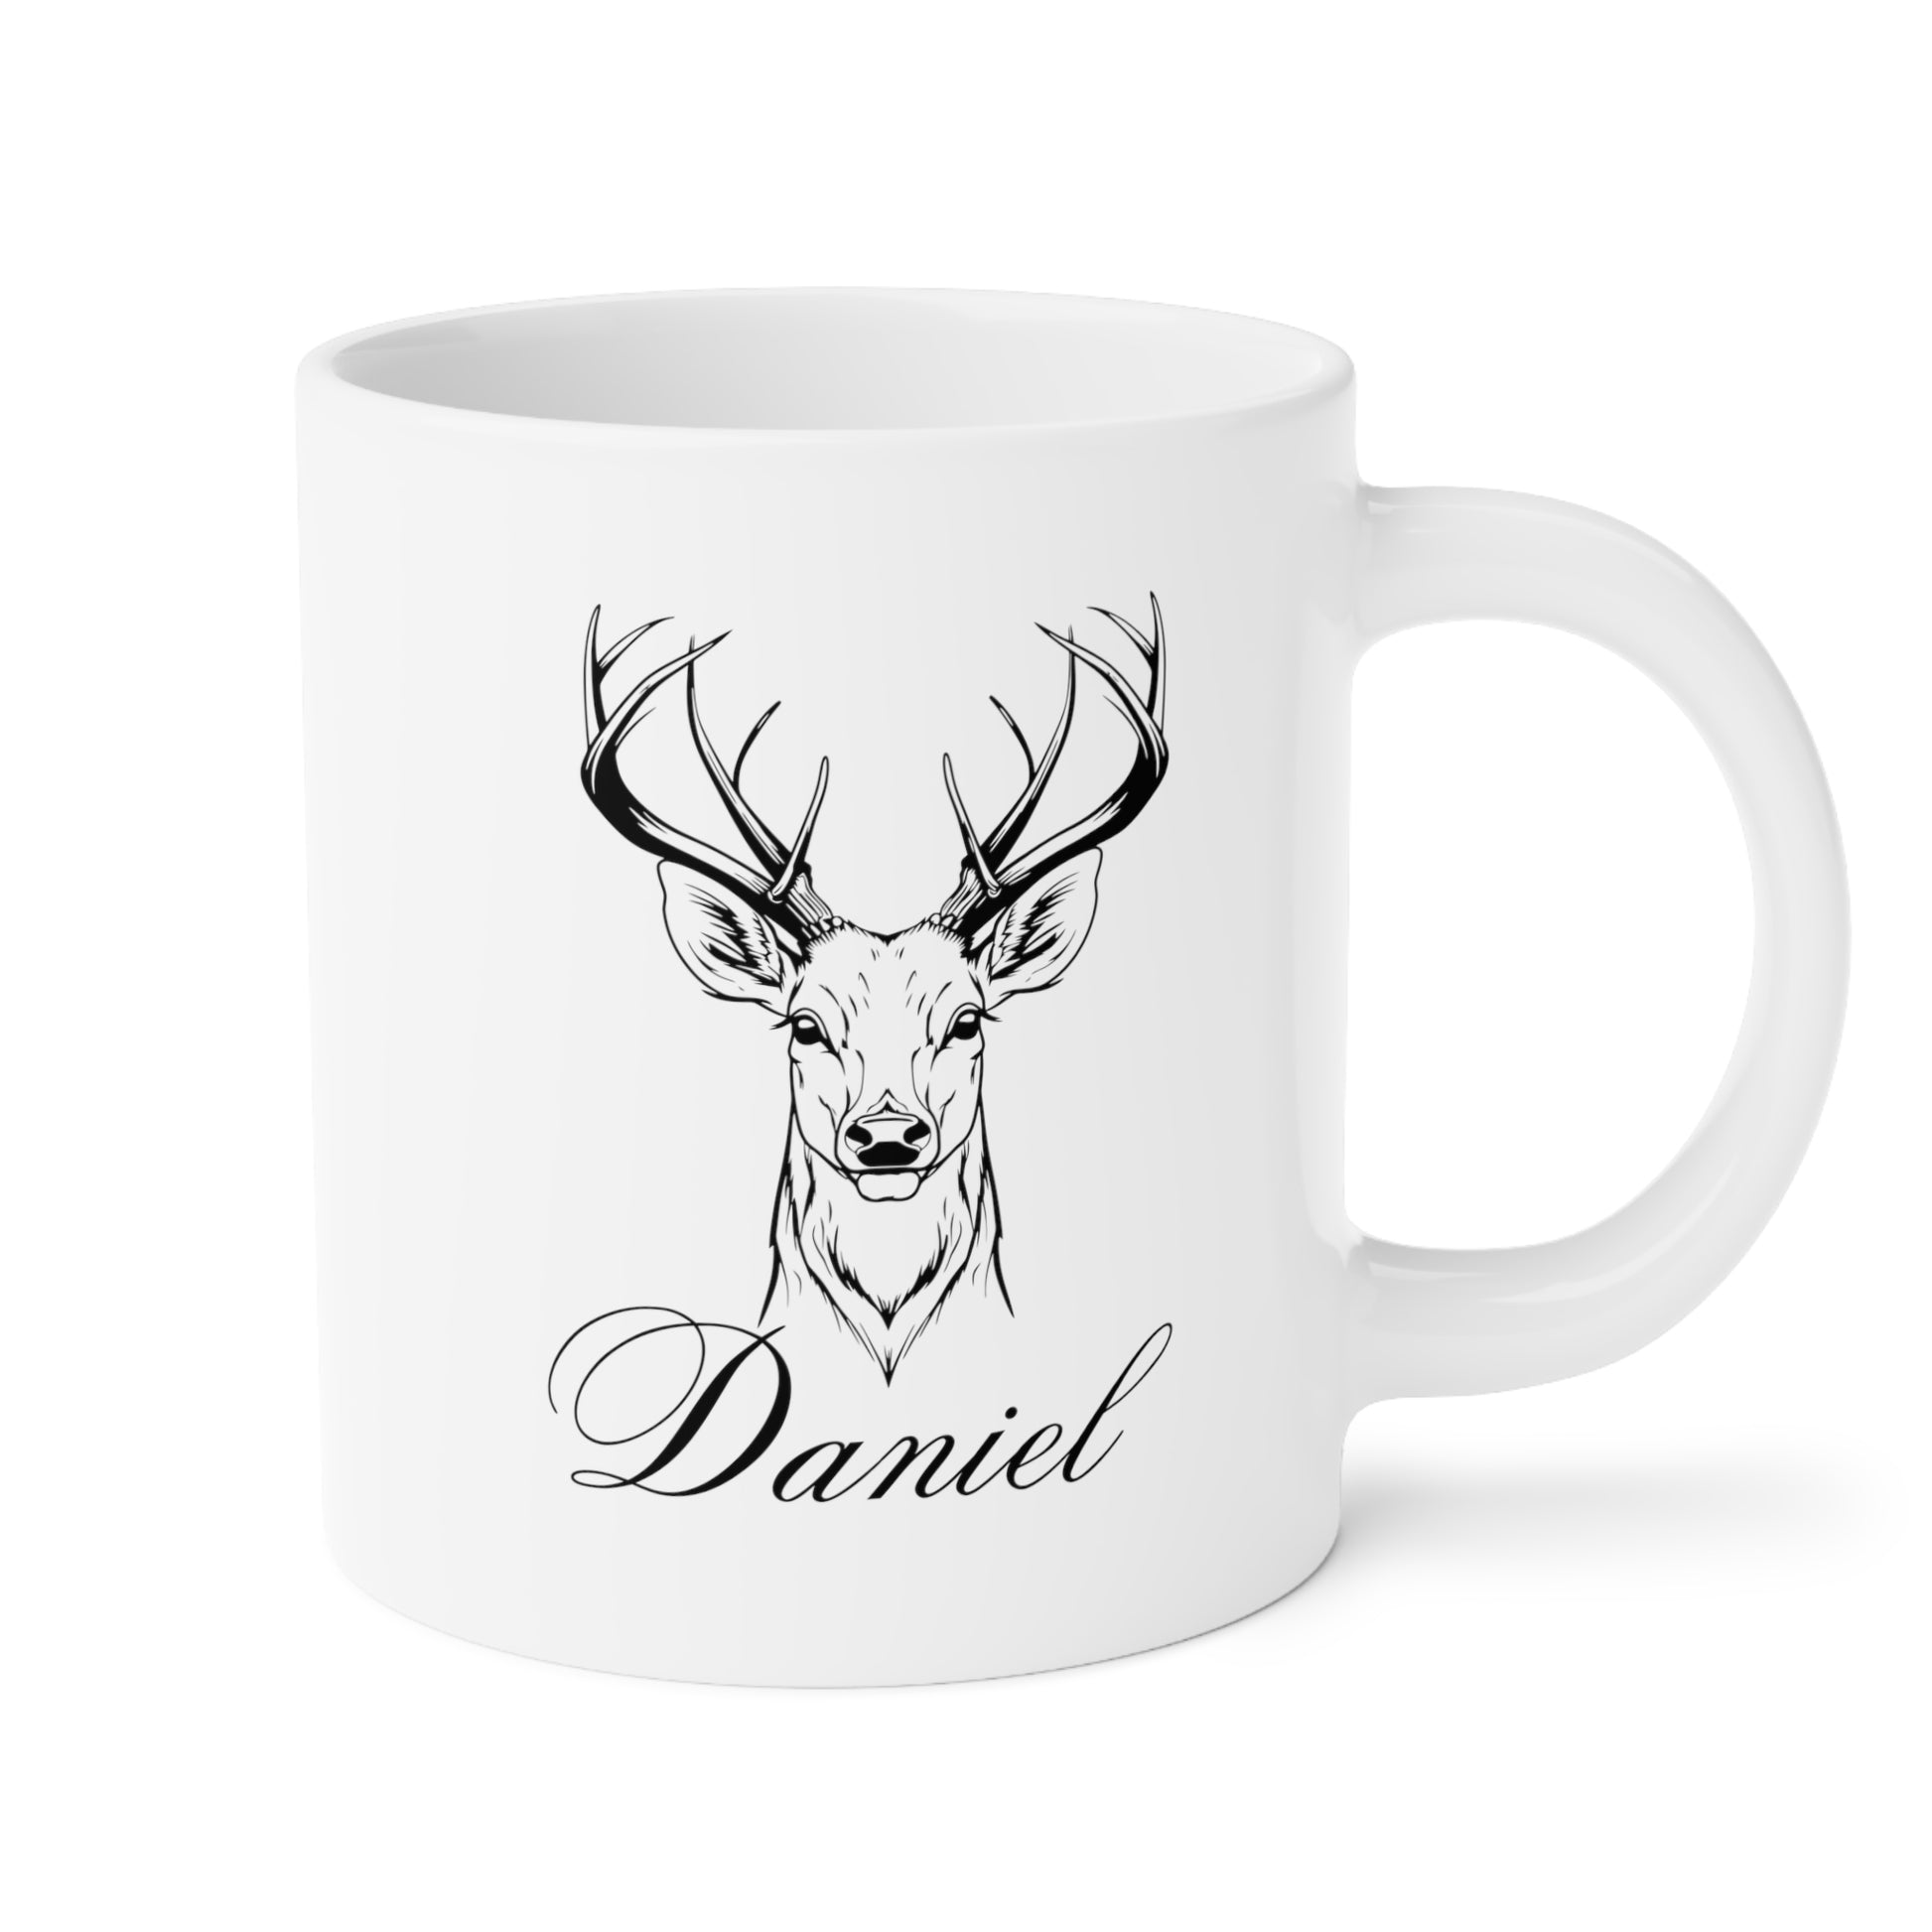 Reindeer Name 20oz white funny large coffee mug gift for deer hunter hunting wildlife lover custom name customize waveywares wavey wares wavywares wavy wares